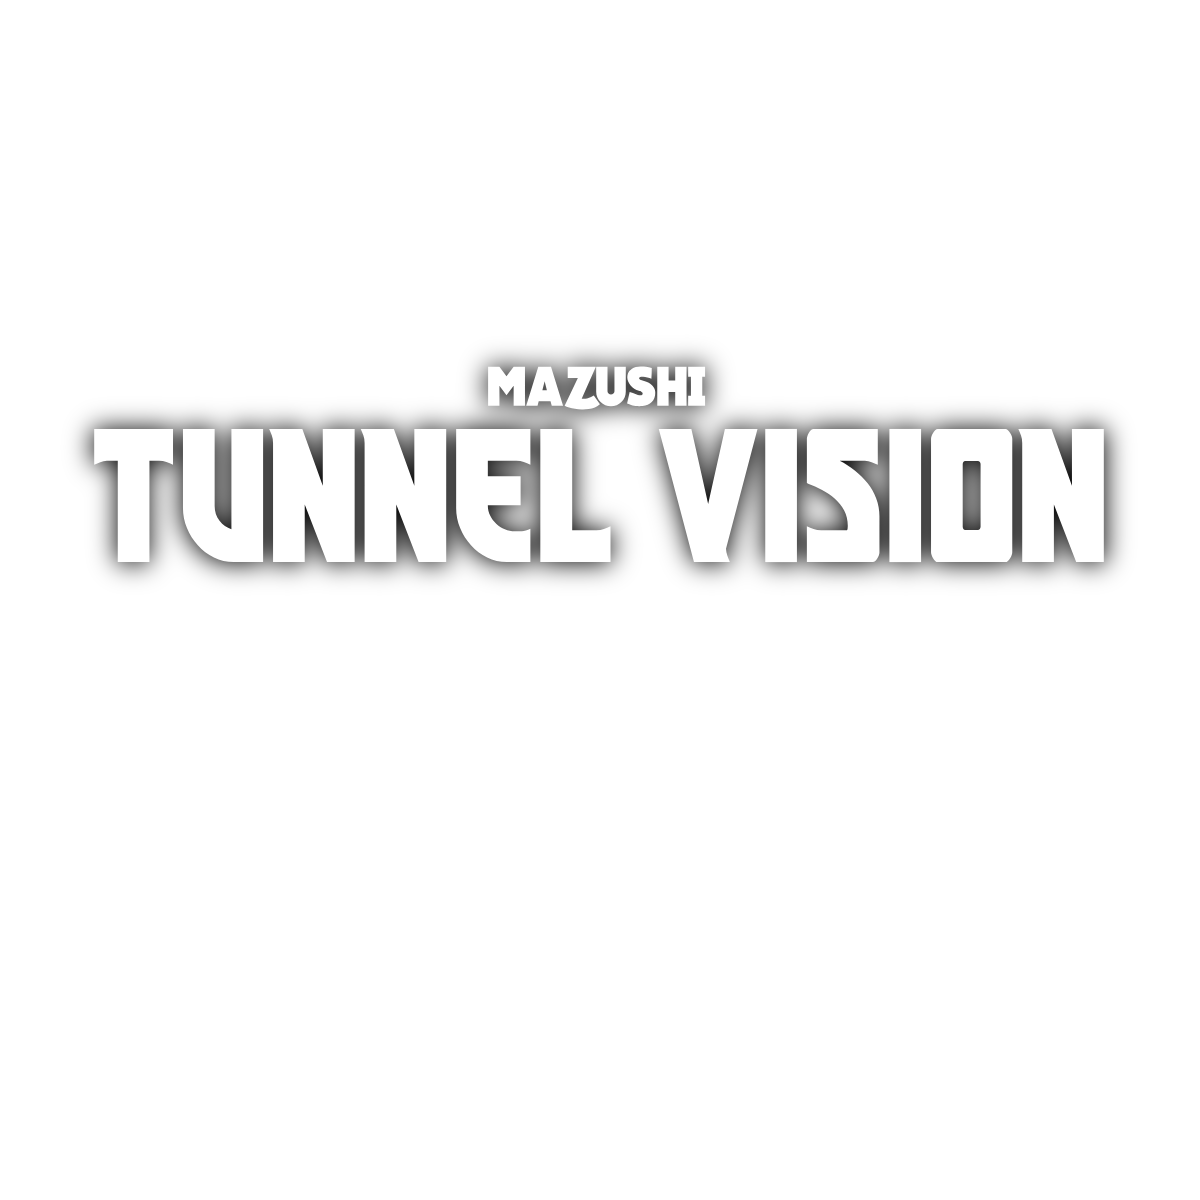 Mazushi Tunnel Vision Sticker - Mazushi